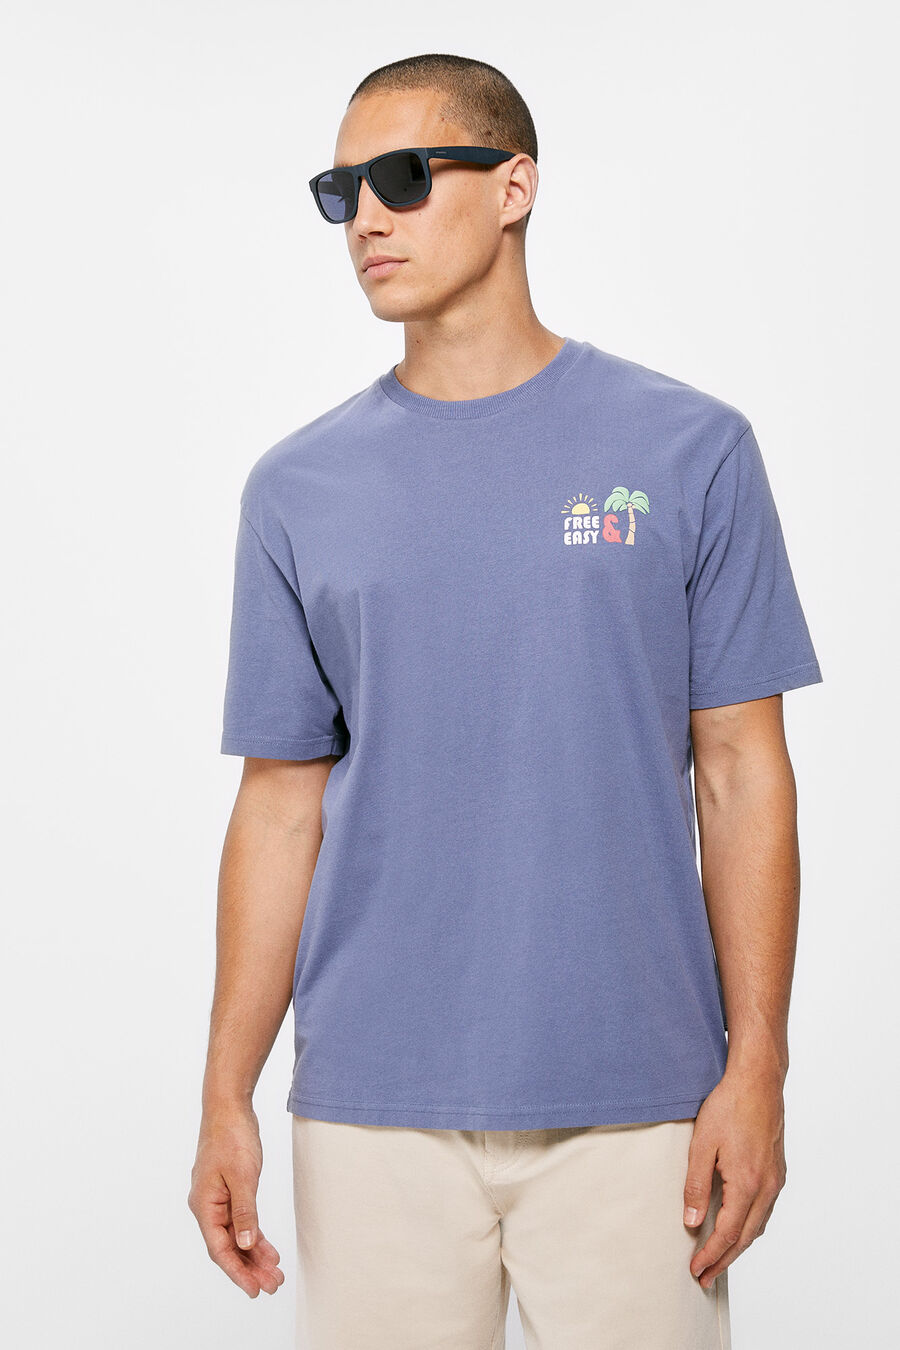 T-shirt empiècement springfield Springfield product